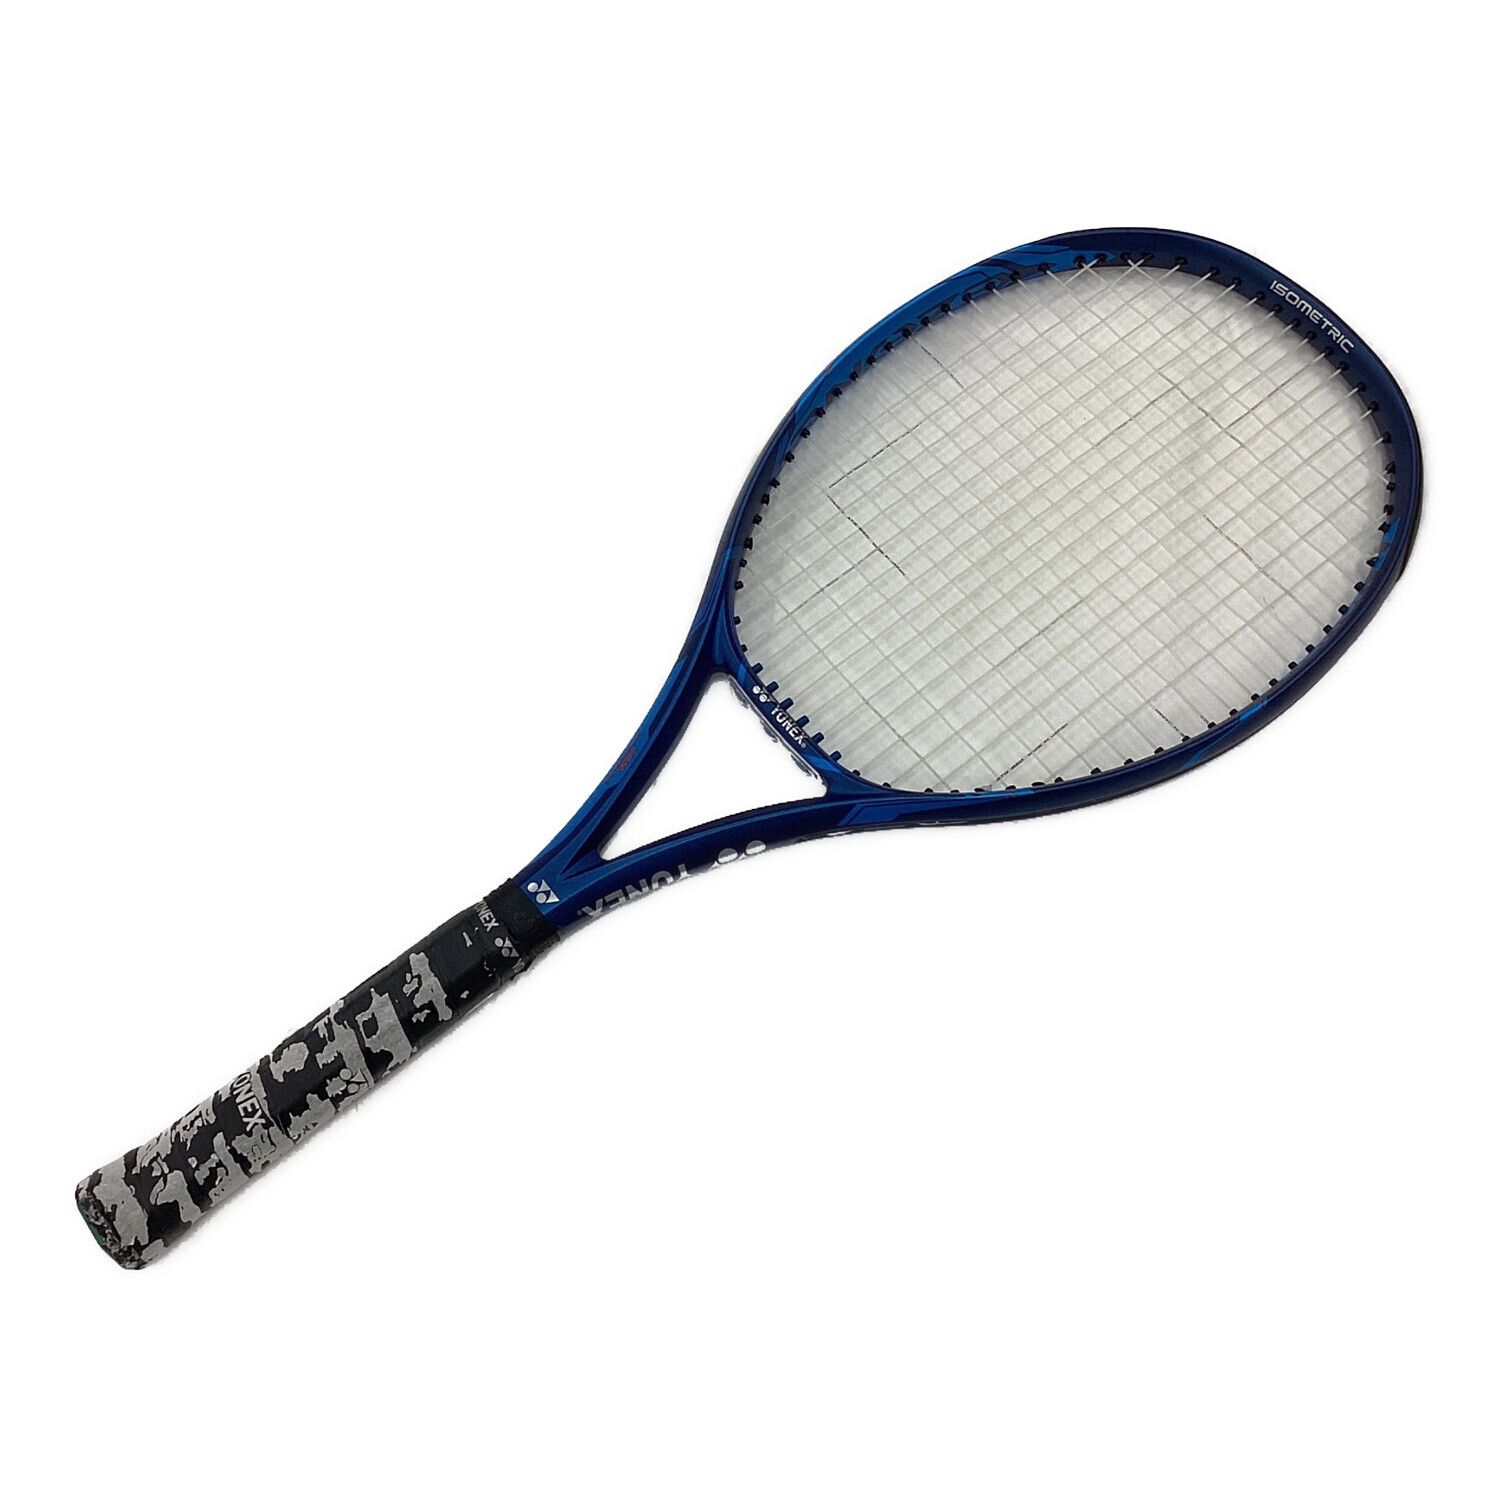 YONEX EZONE 100 G2 2019 硬式テニスラケット - ラケット(硬式用)